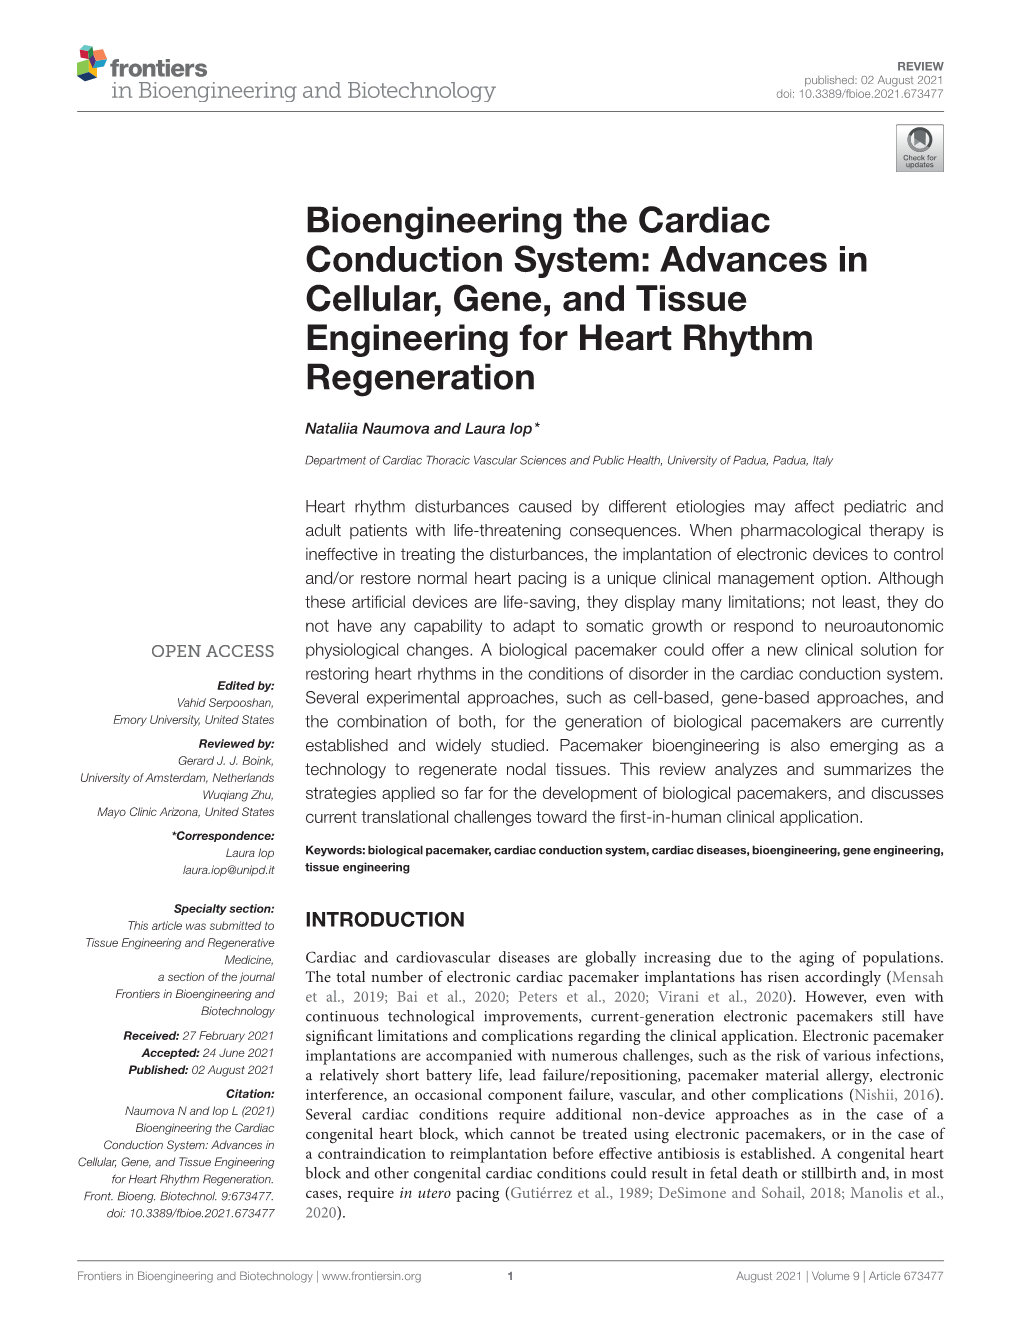 Bioengineering the Cardiac Conduction System: Advances in Cellular, Gene, and Tissue Engineering for Heart Rhythm Regeneration